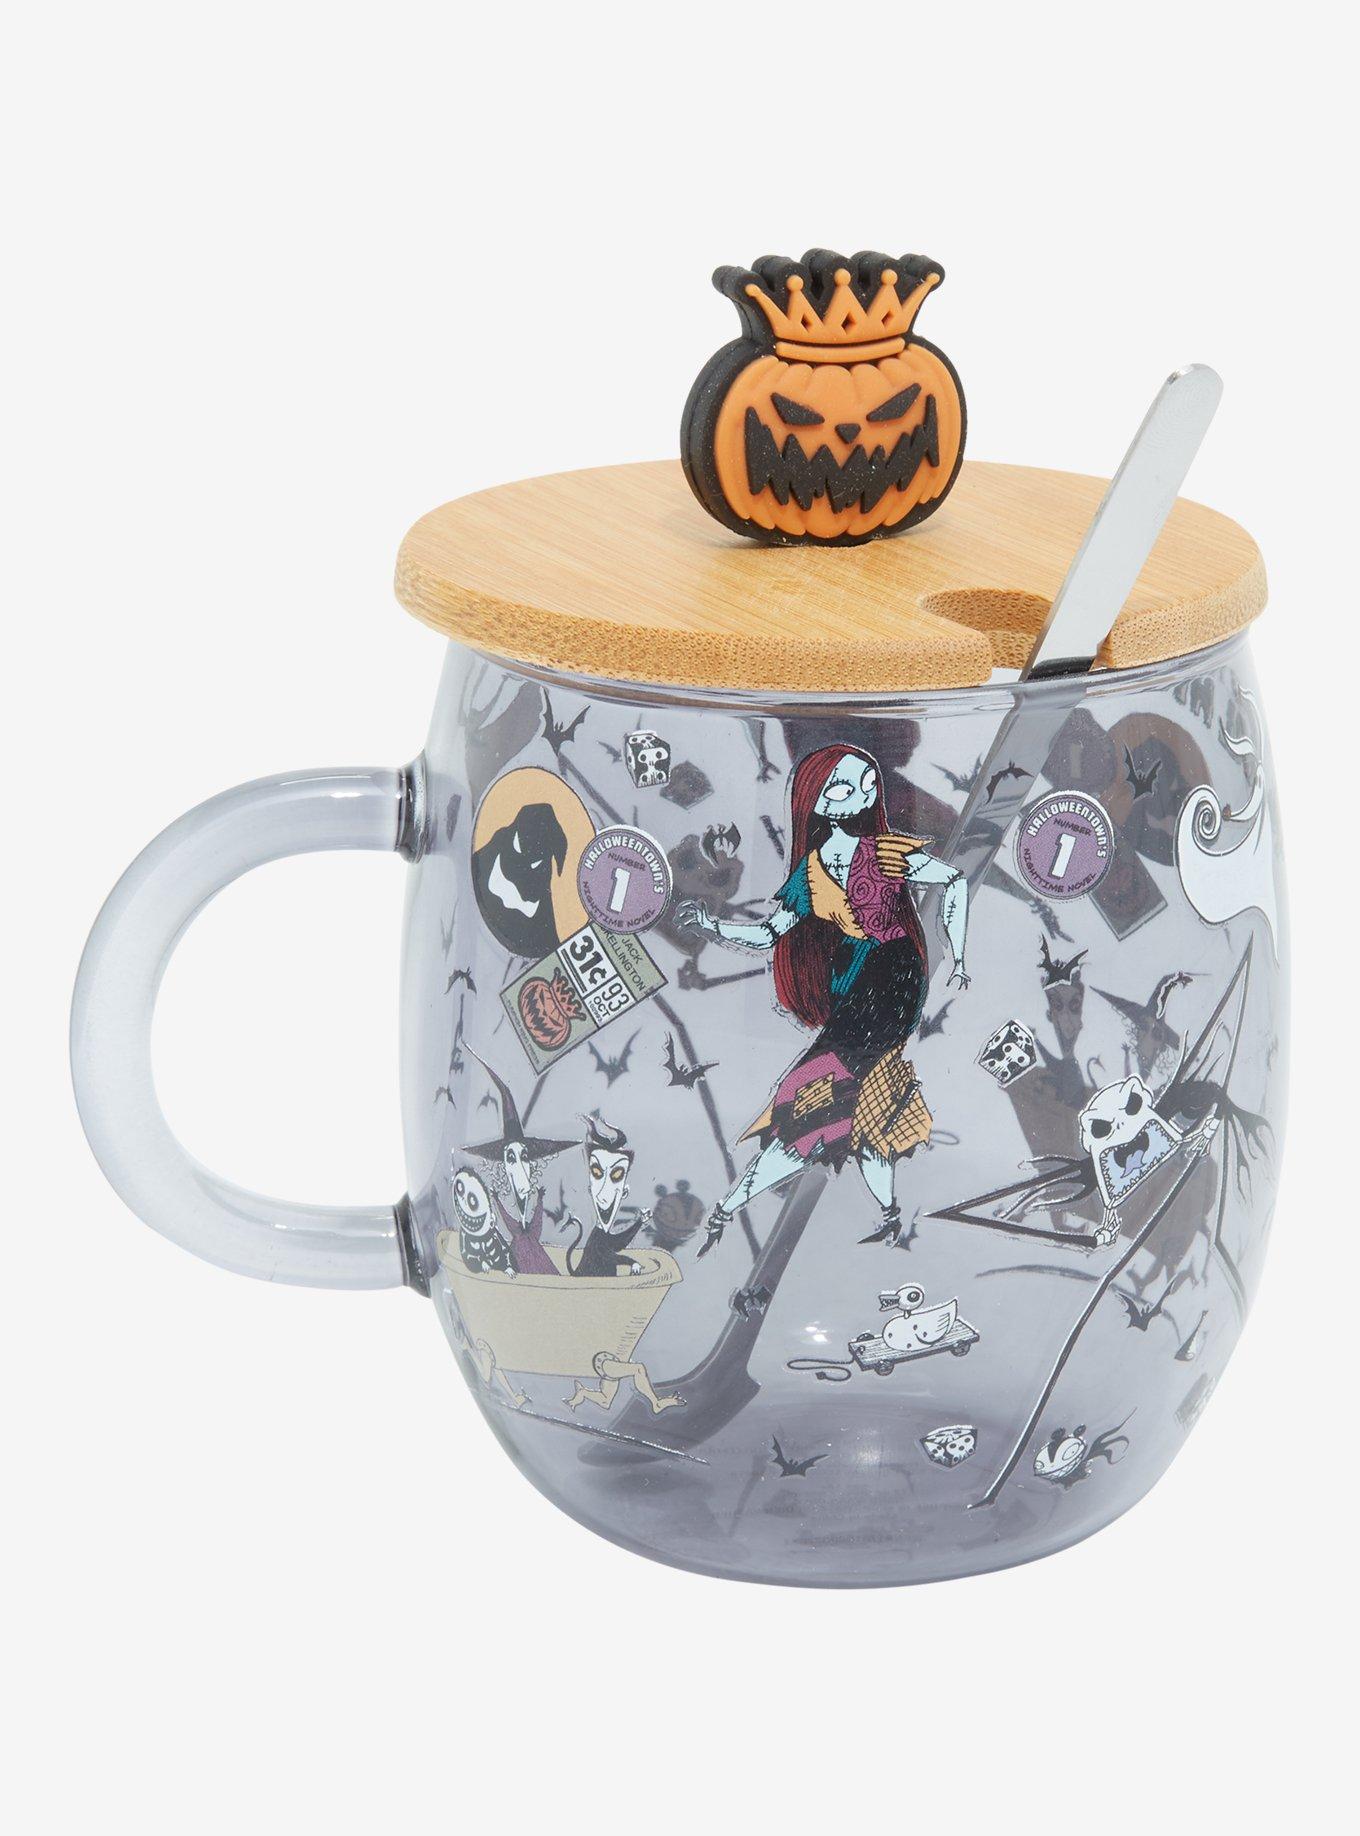 Disney Is Selling A 'Nightmare Before Christmas Mug' This Halloween